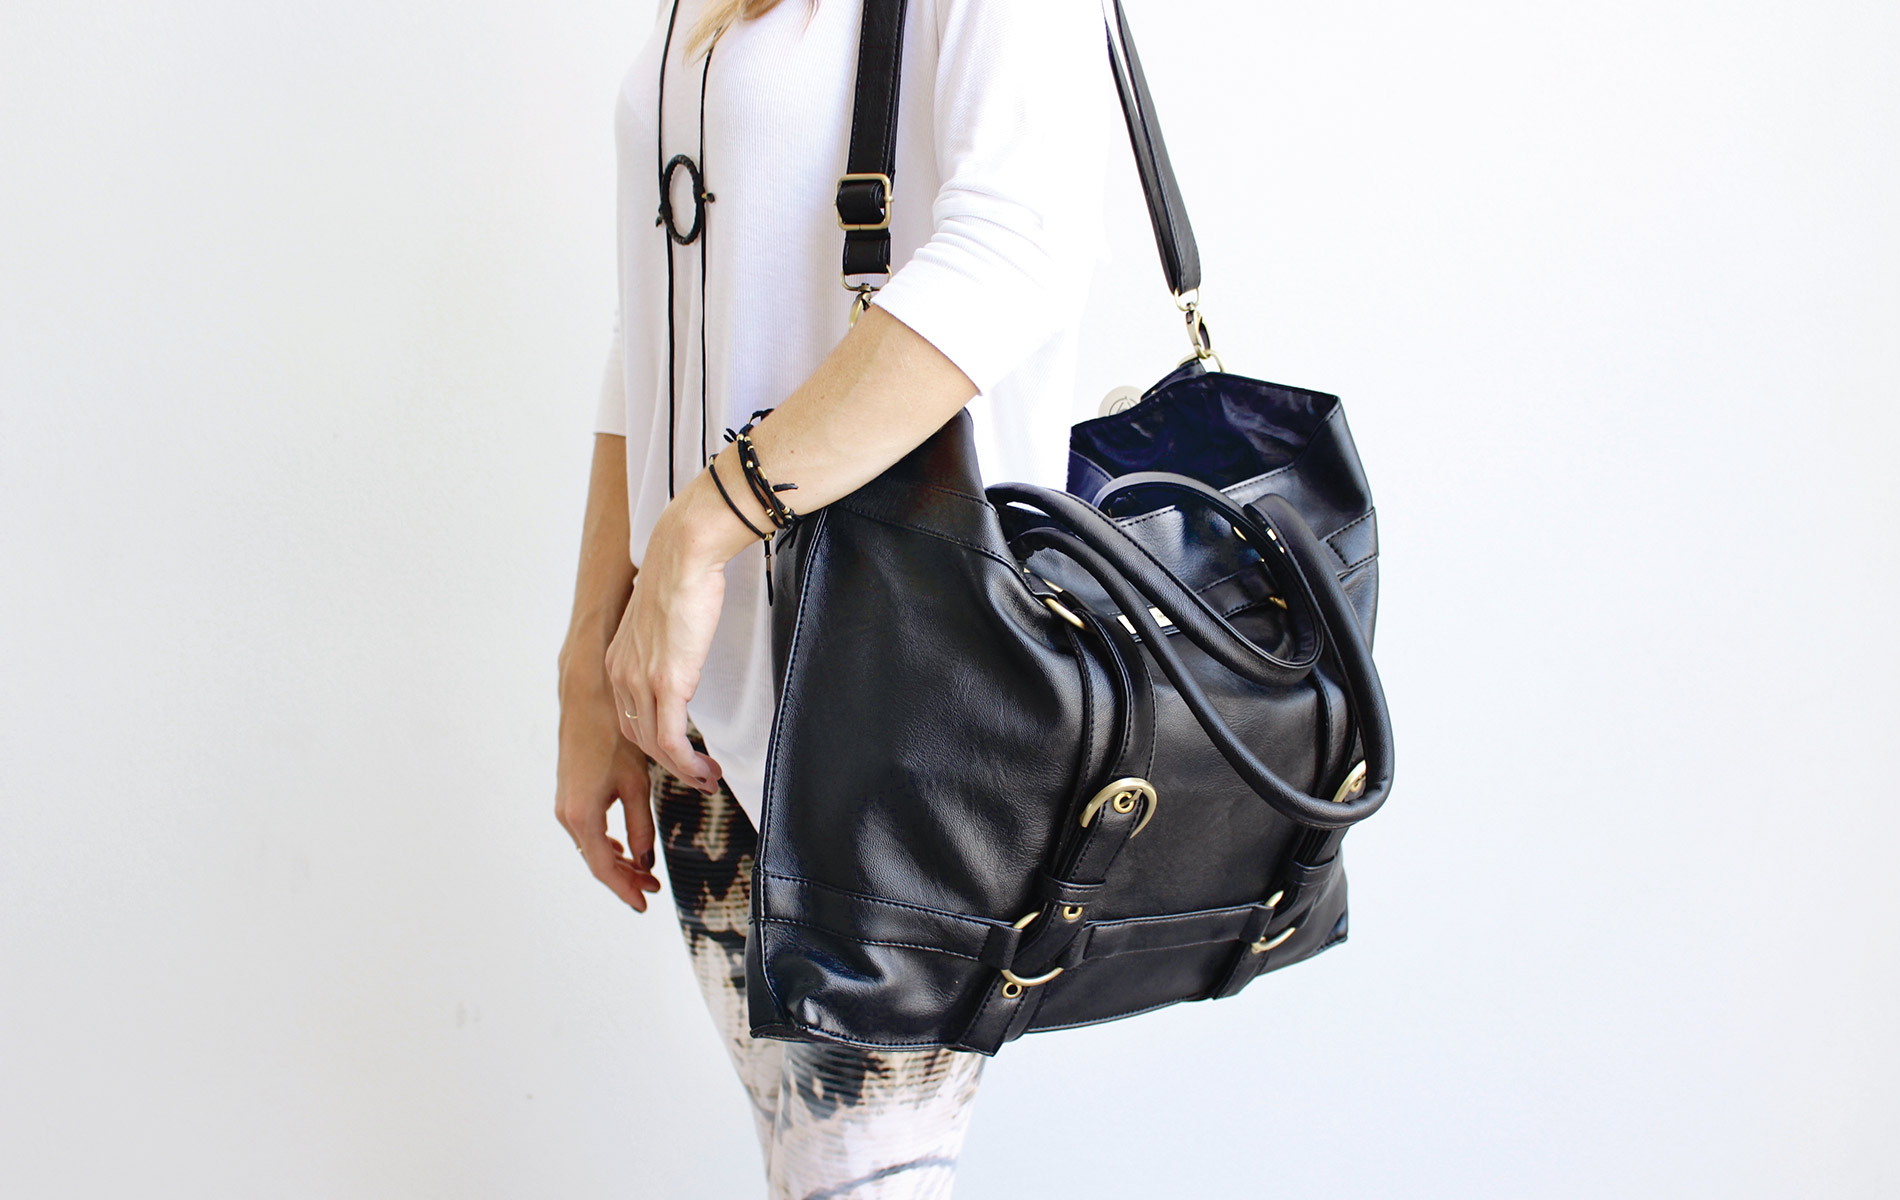 The Be Great shoulder bag by Maha Loka model with shoulder bag on white background